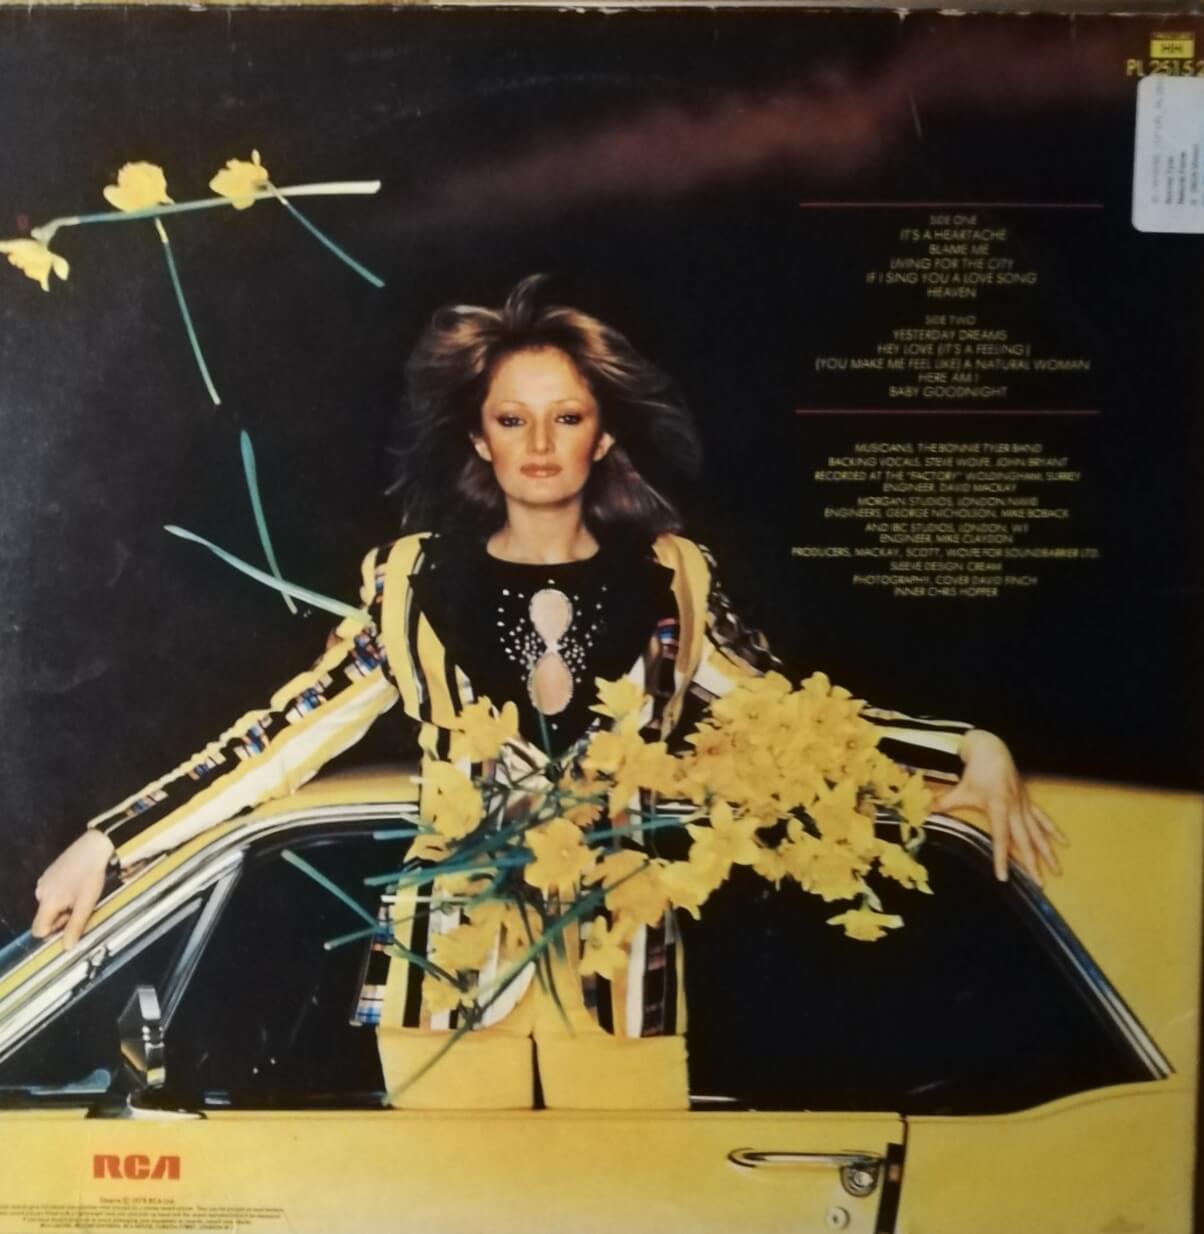 Okładka płyty winylowej artysty Bonnie Tyler o tytule Natural Force